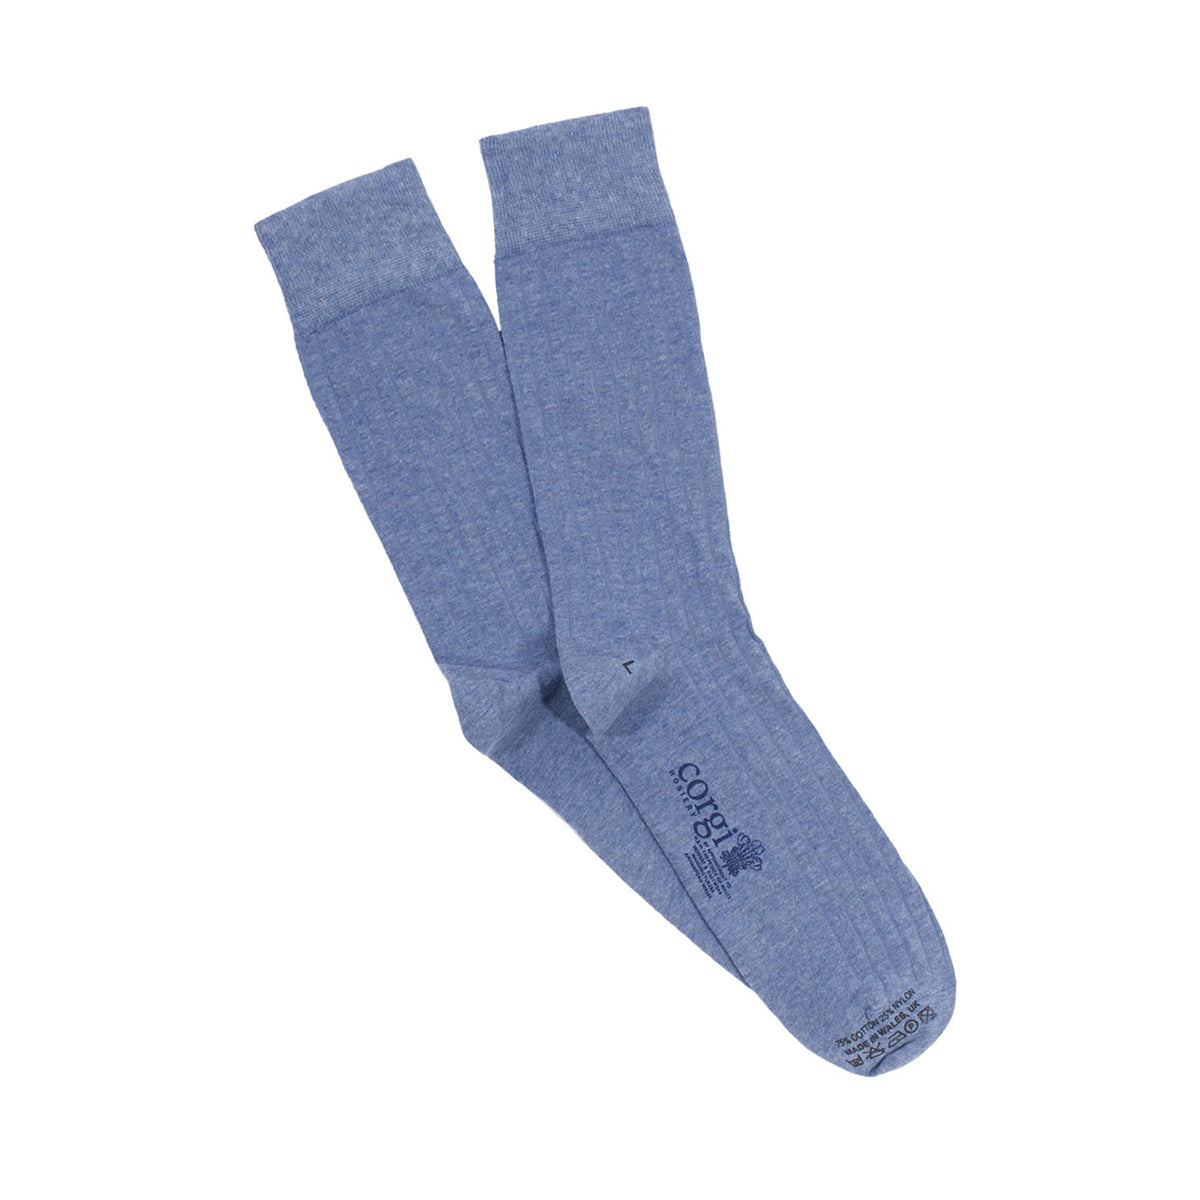 Denim Blue ‘Brecon’ Ribbed Cotton Socks  Robert Old   